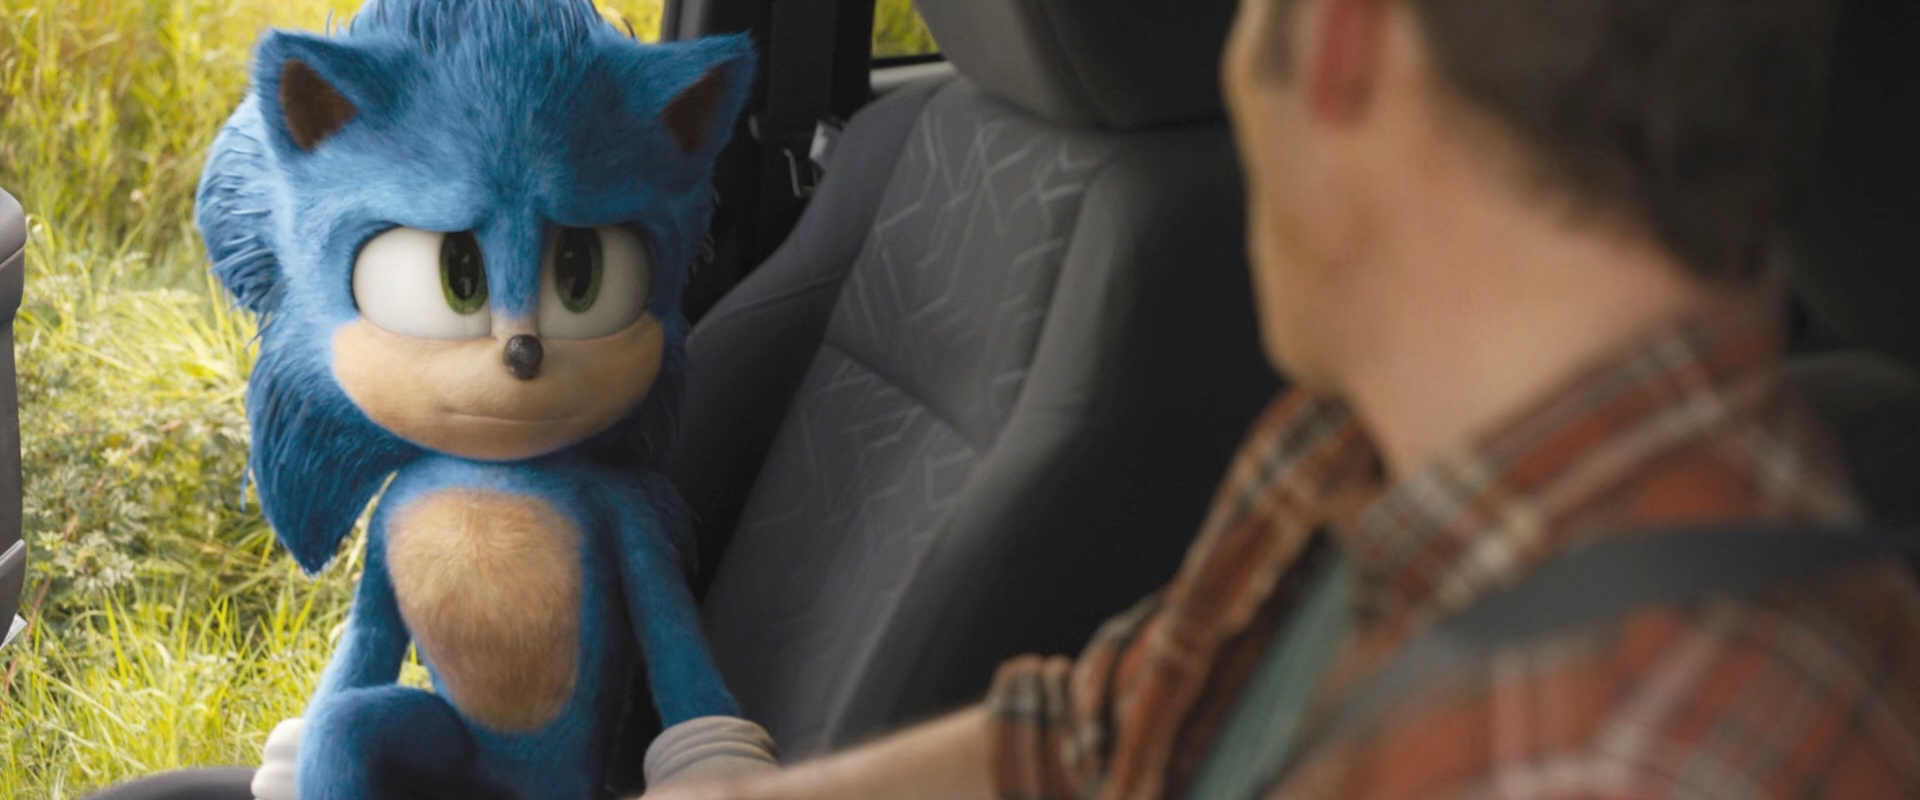 Sonic the Hedgehog (2020)